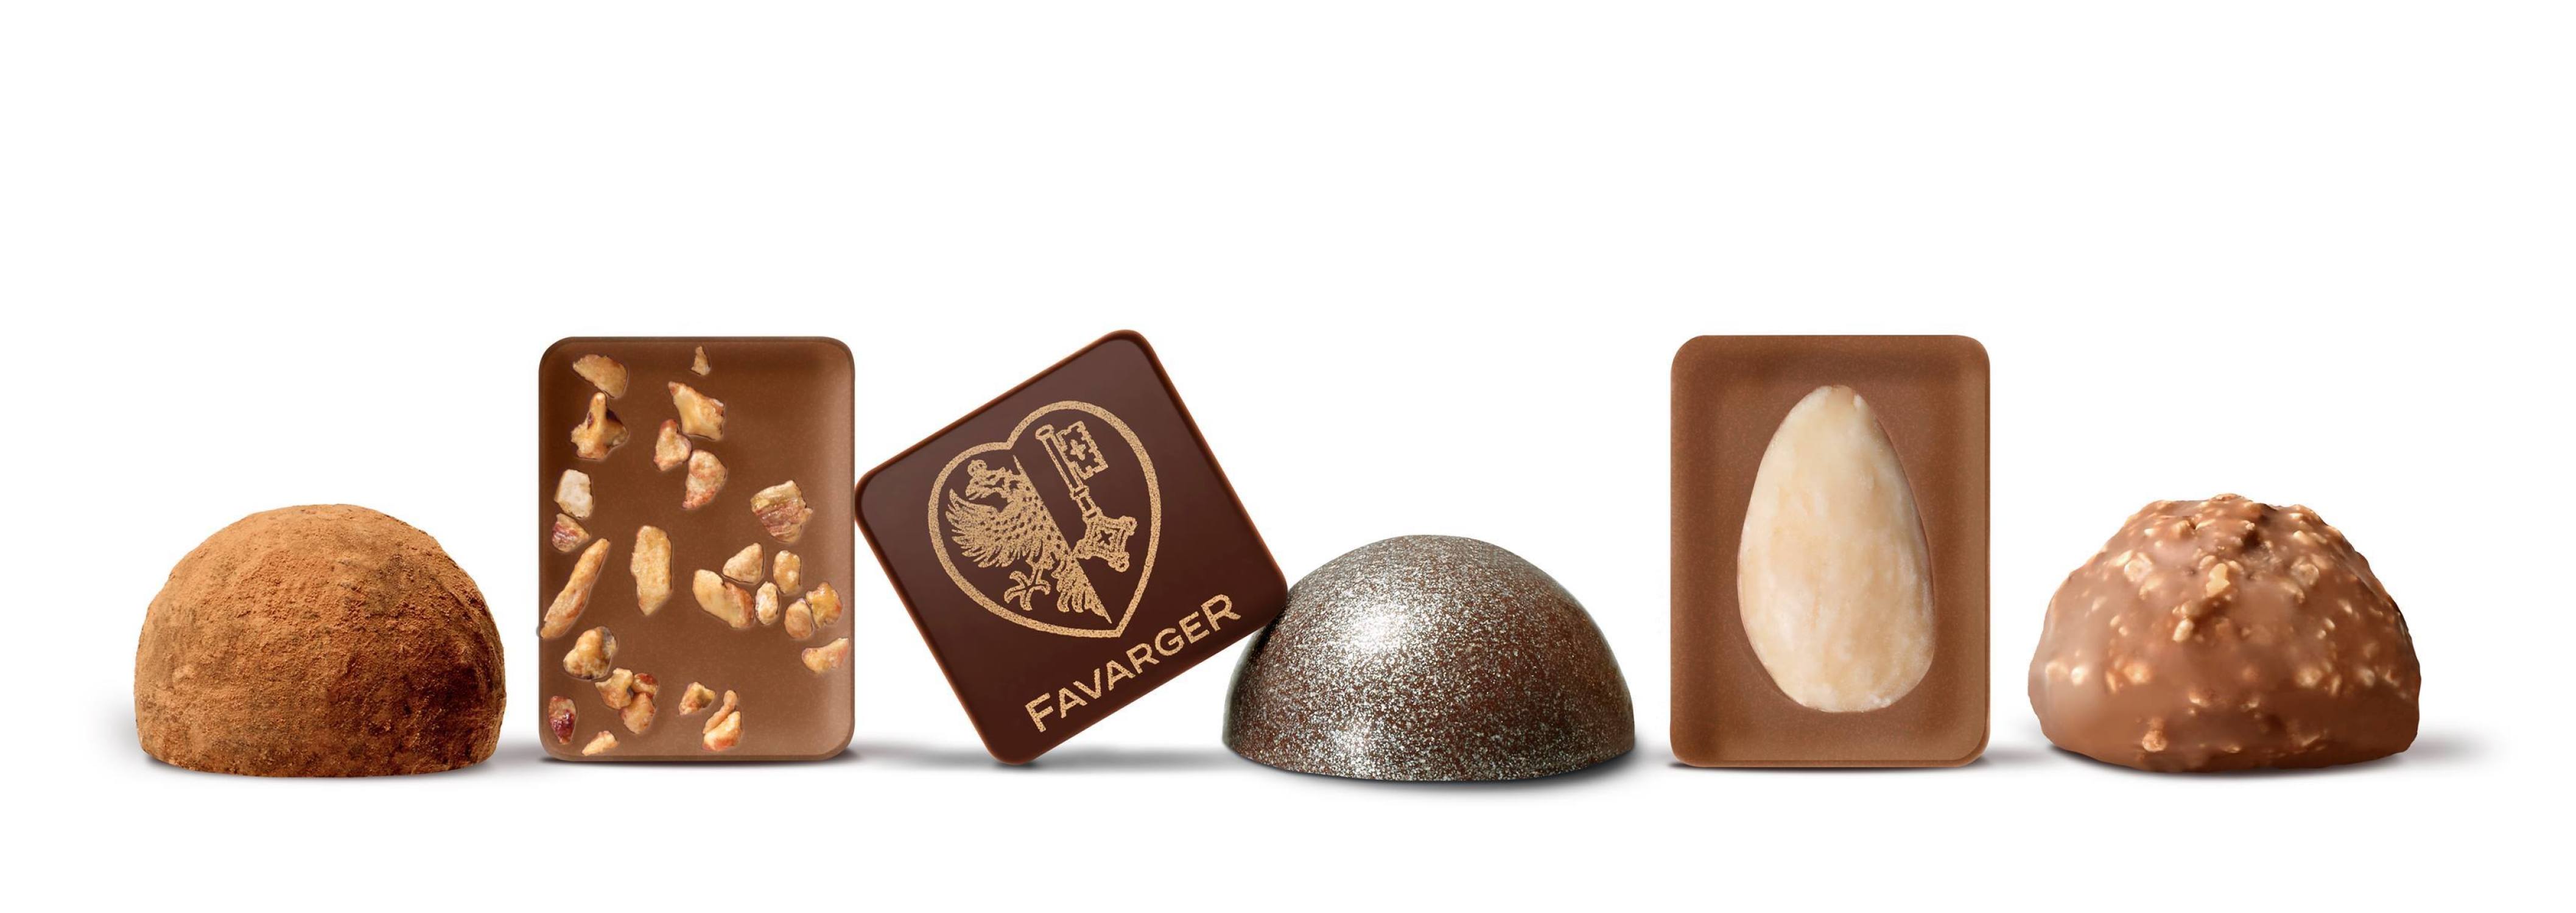 FAVARGER CHOCOLATS ET CACAOS- Favarger Organic Chocolate